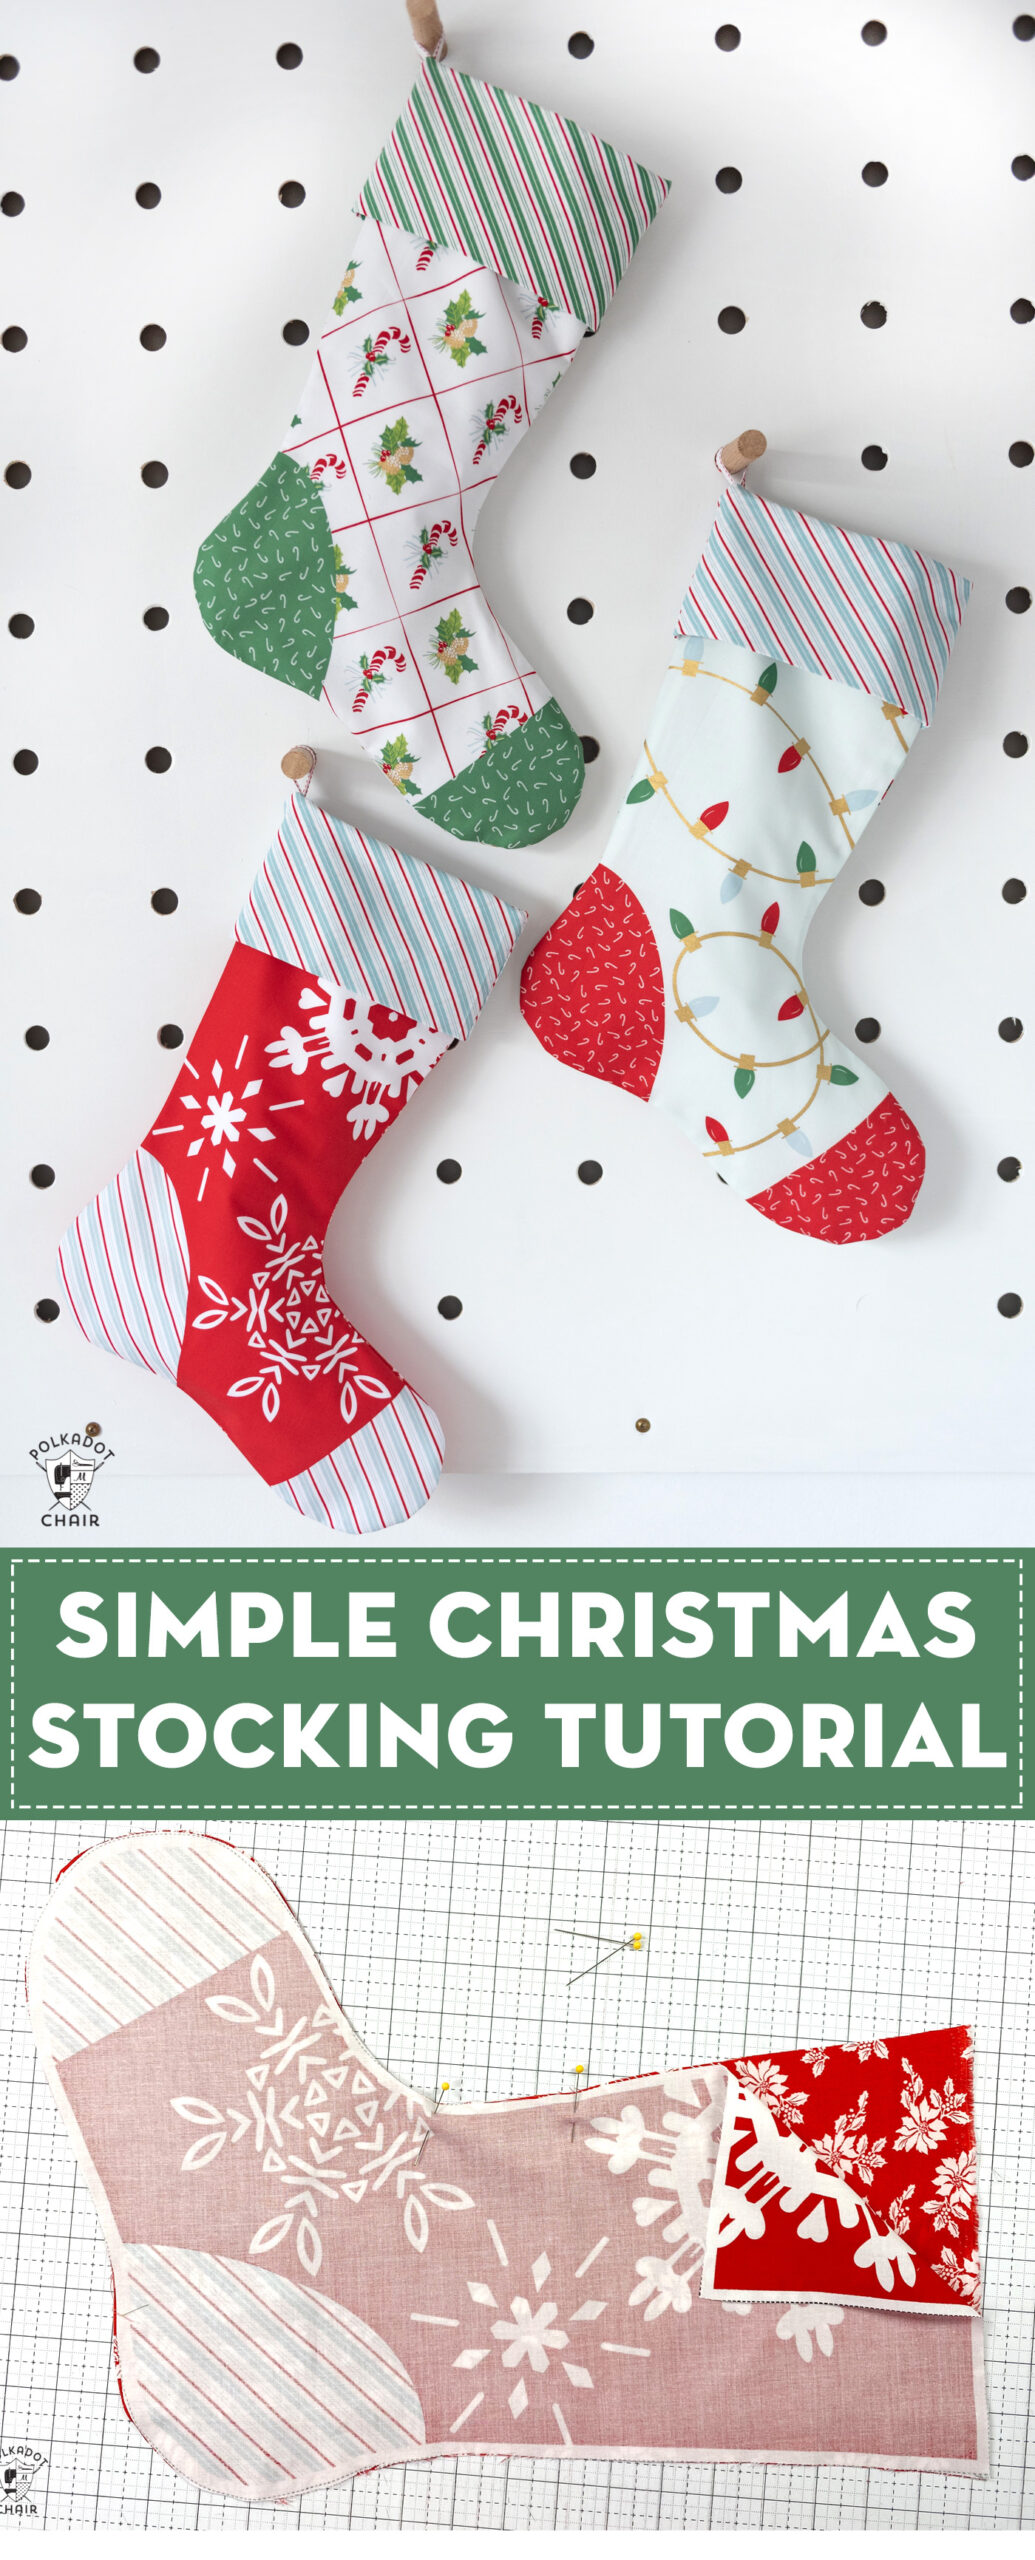 https://www.polkadotchair.com/wp-content/uploads/2020/06/simple-christmas-stocking-tutorial-pinterest-scaled.jpg